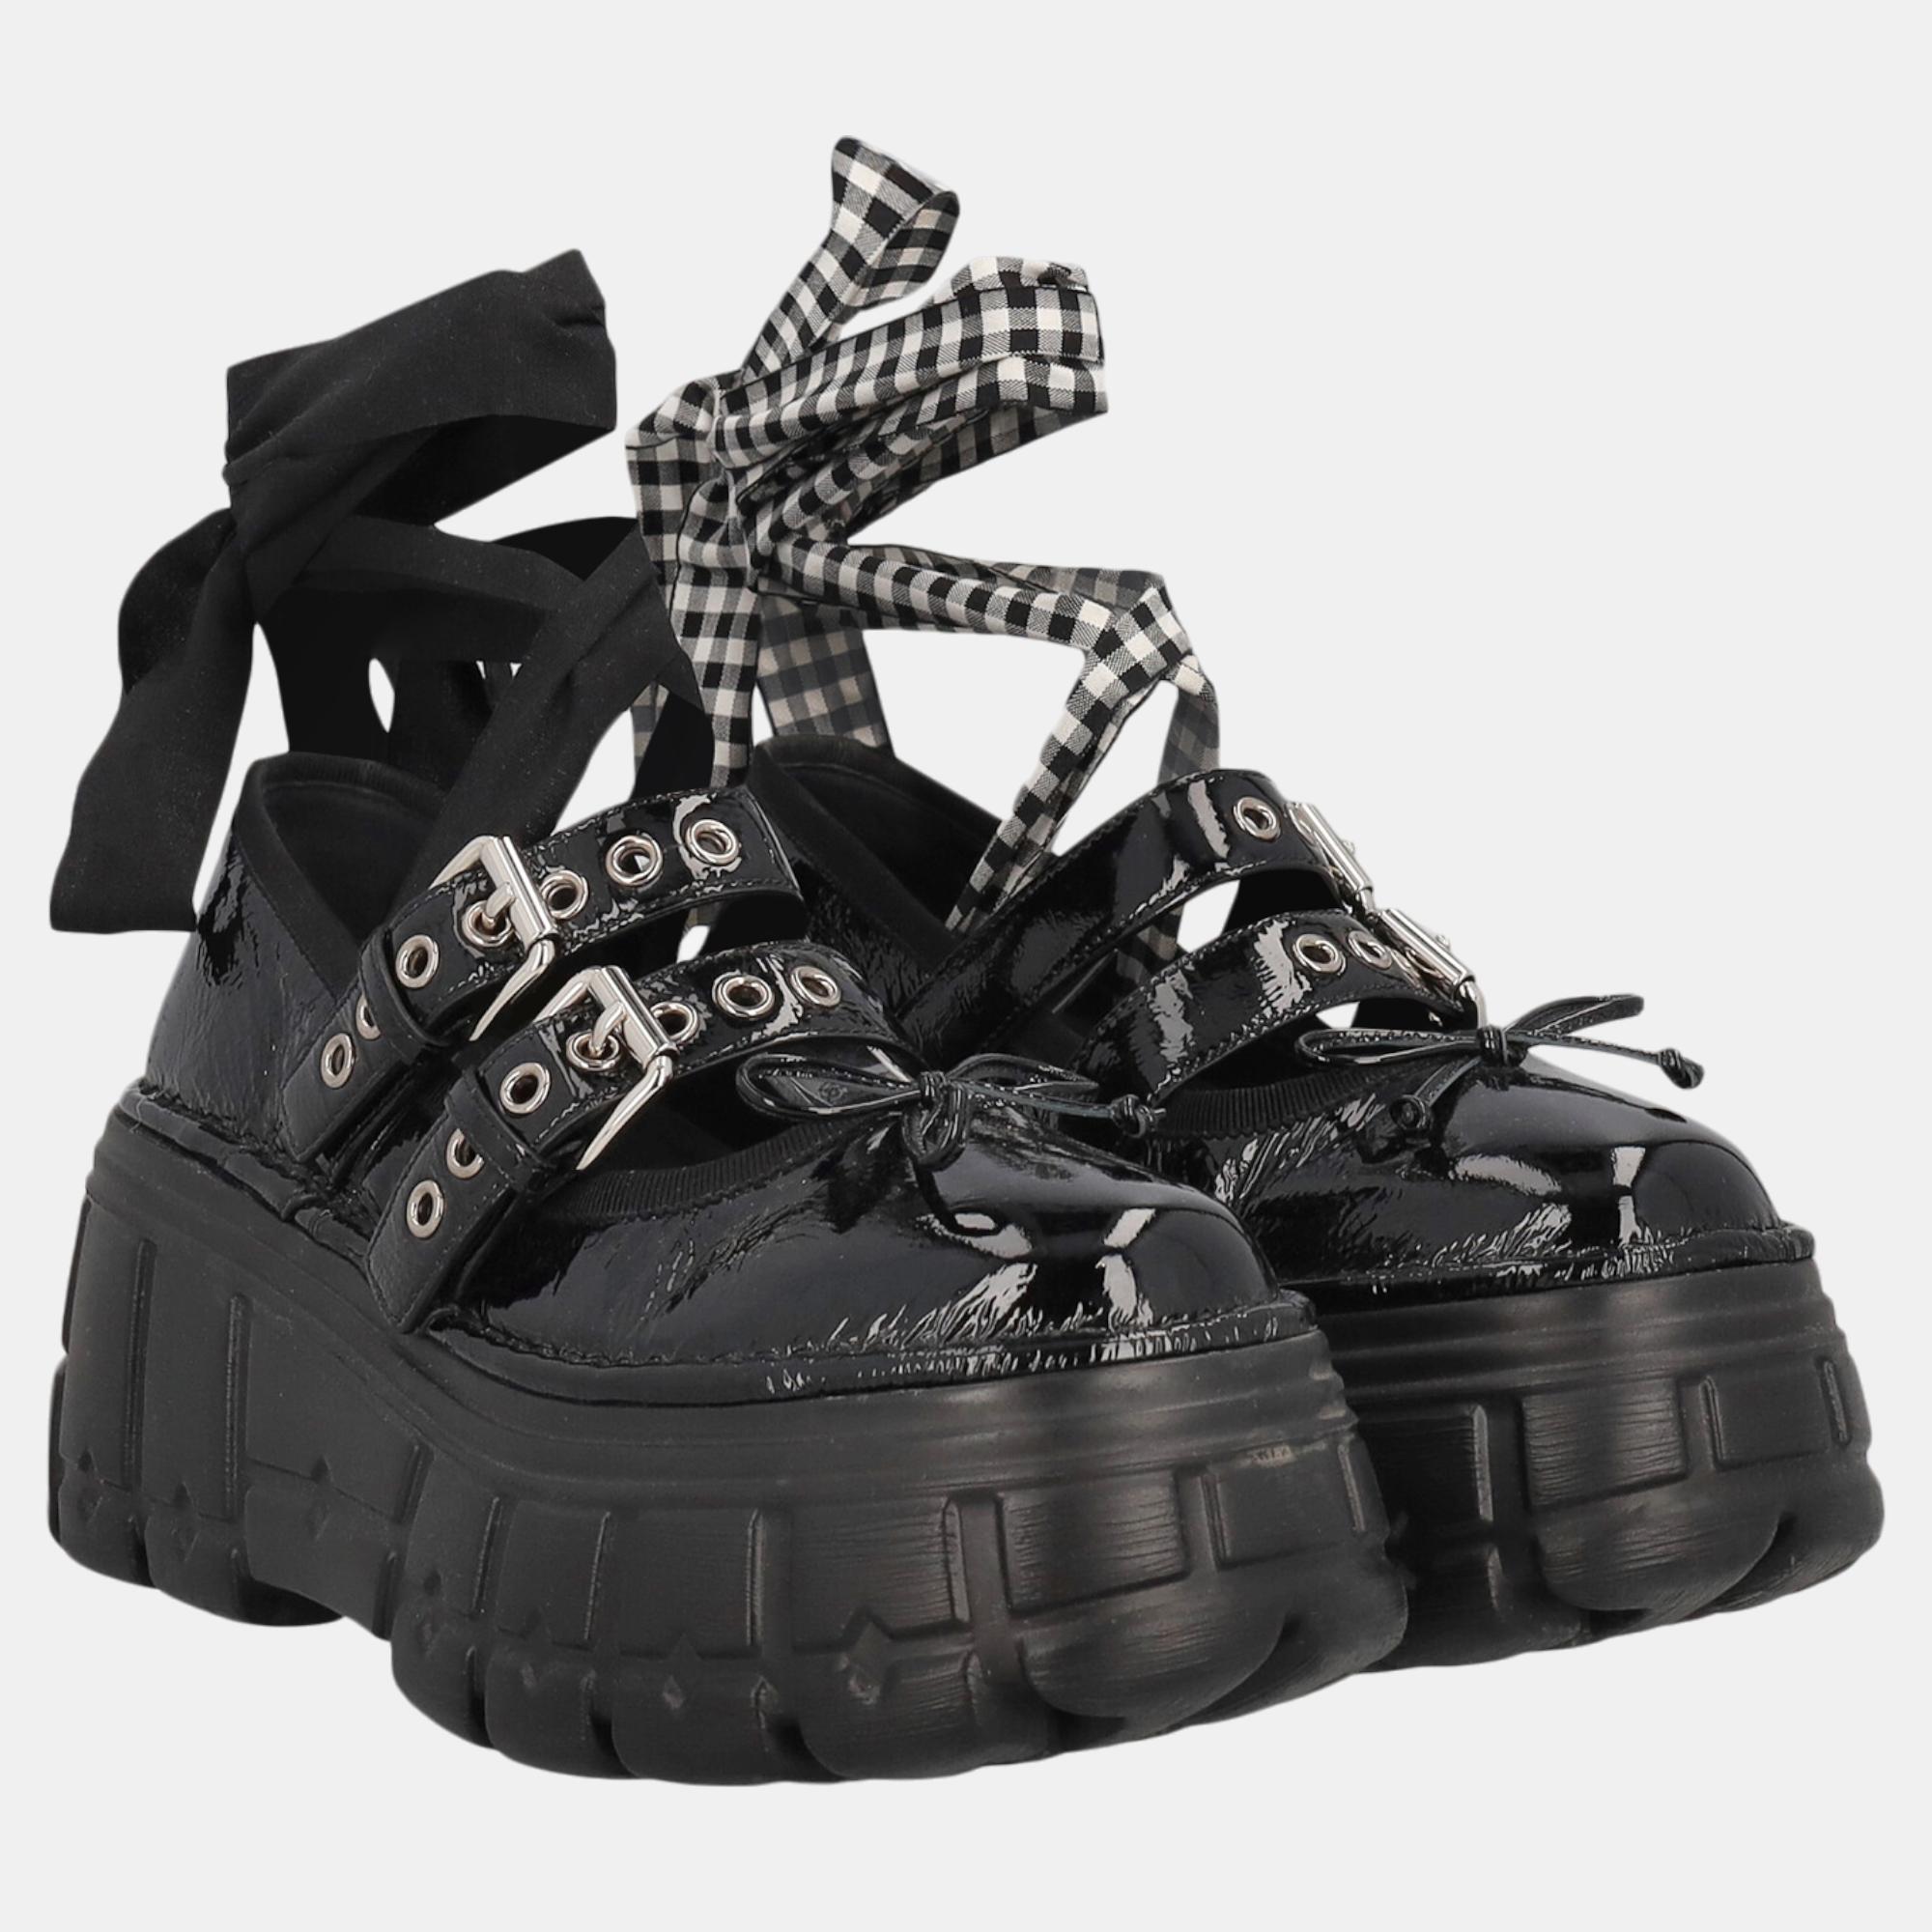 Miu Miu  Women's Leather Loafers - Black - EU 36